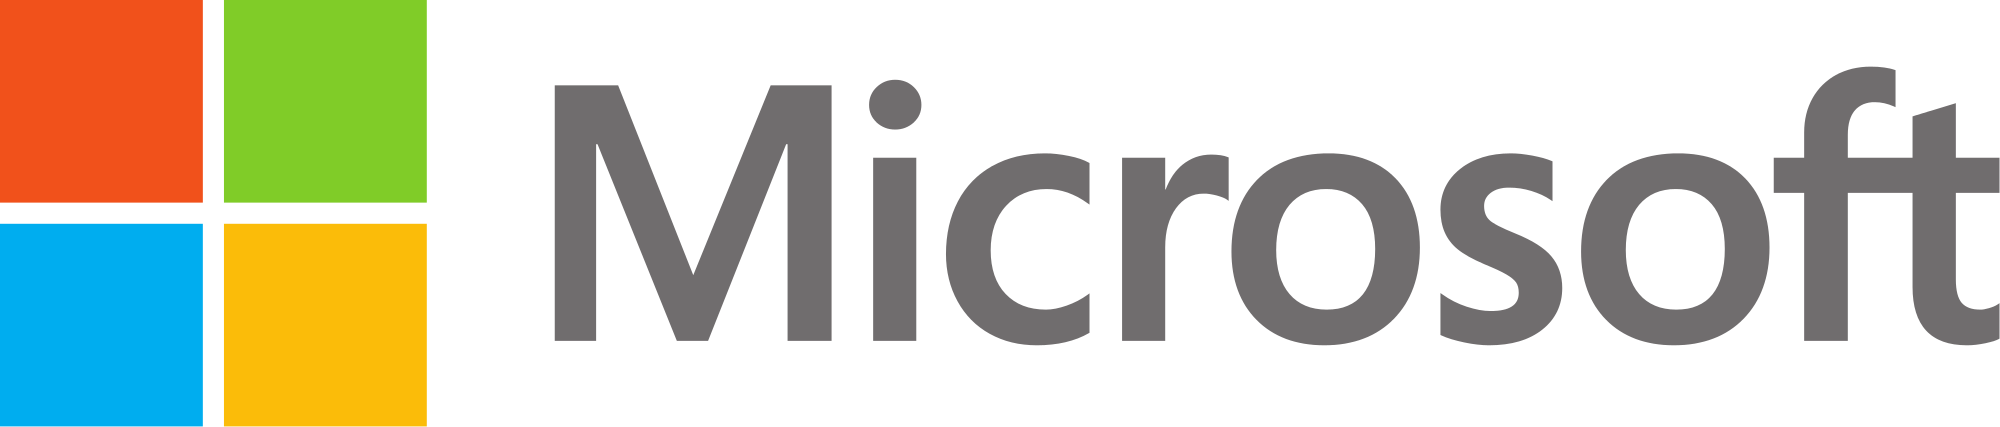 Microsoft Logo Image PNG Image